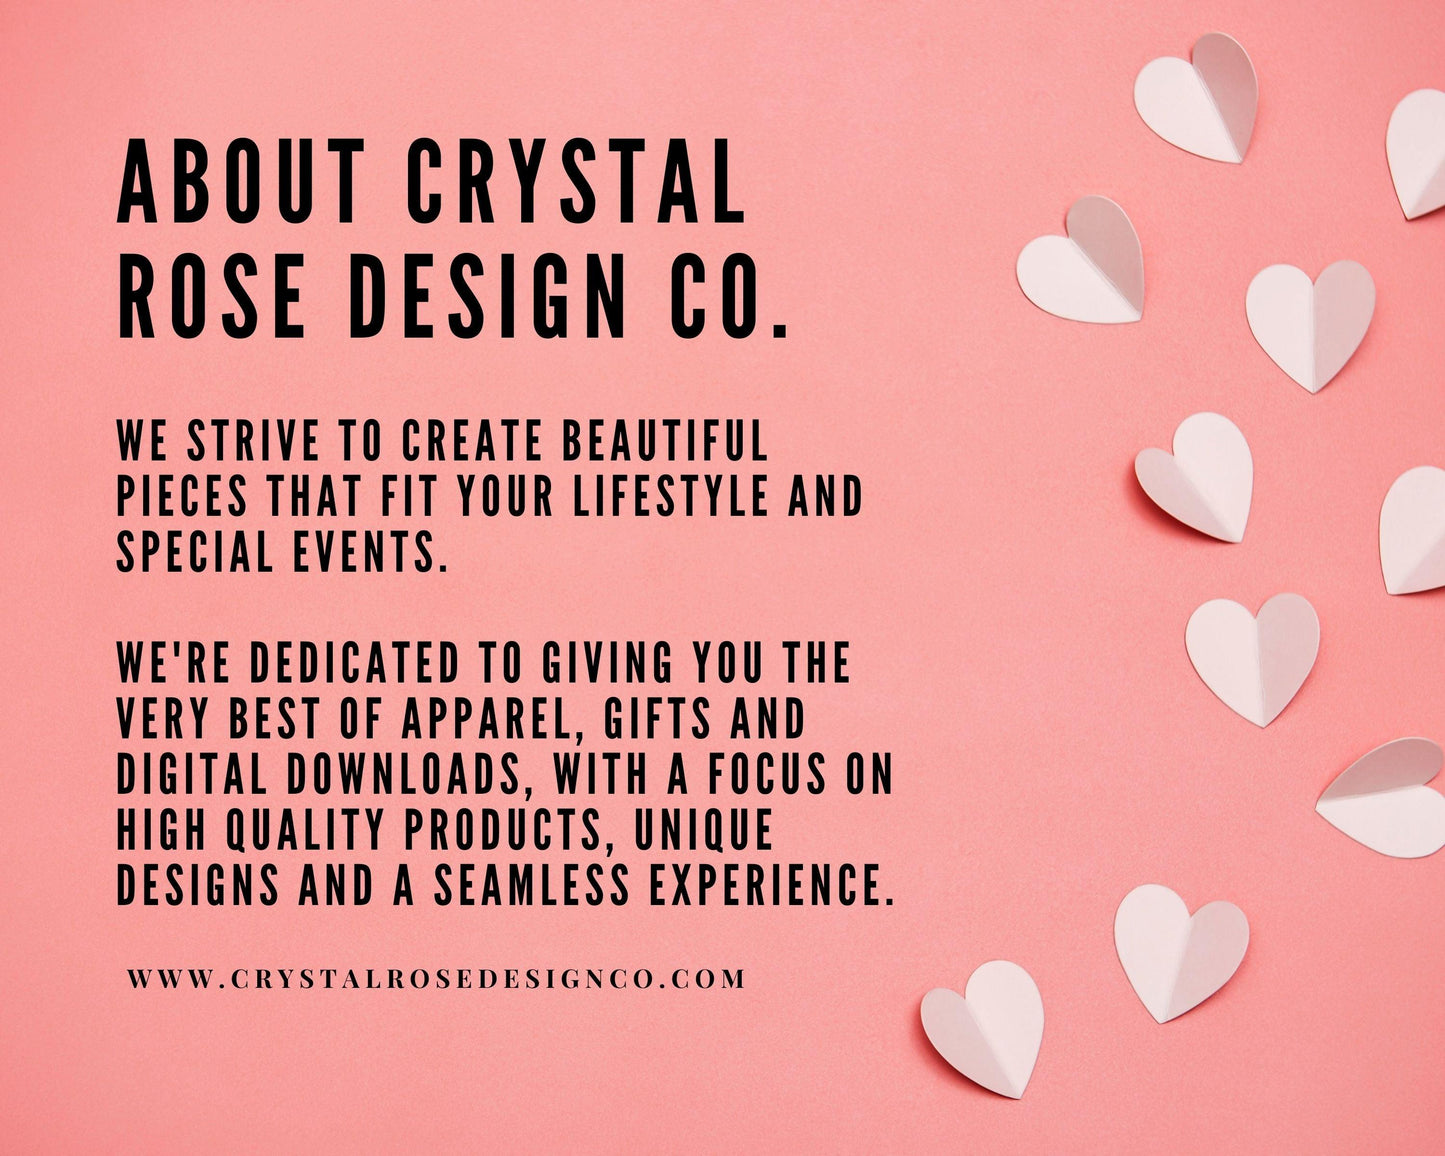 Let's Go Girls Bridesmaid Cowgirl Crewneck Sweatshirt - Crystal Rose Design Co.